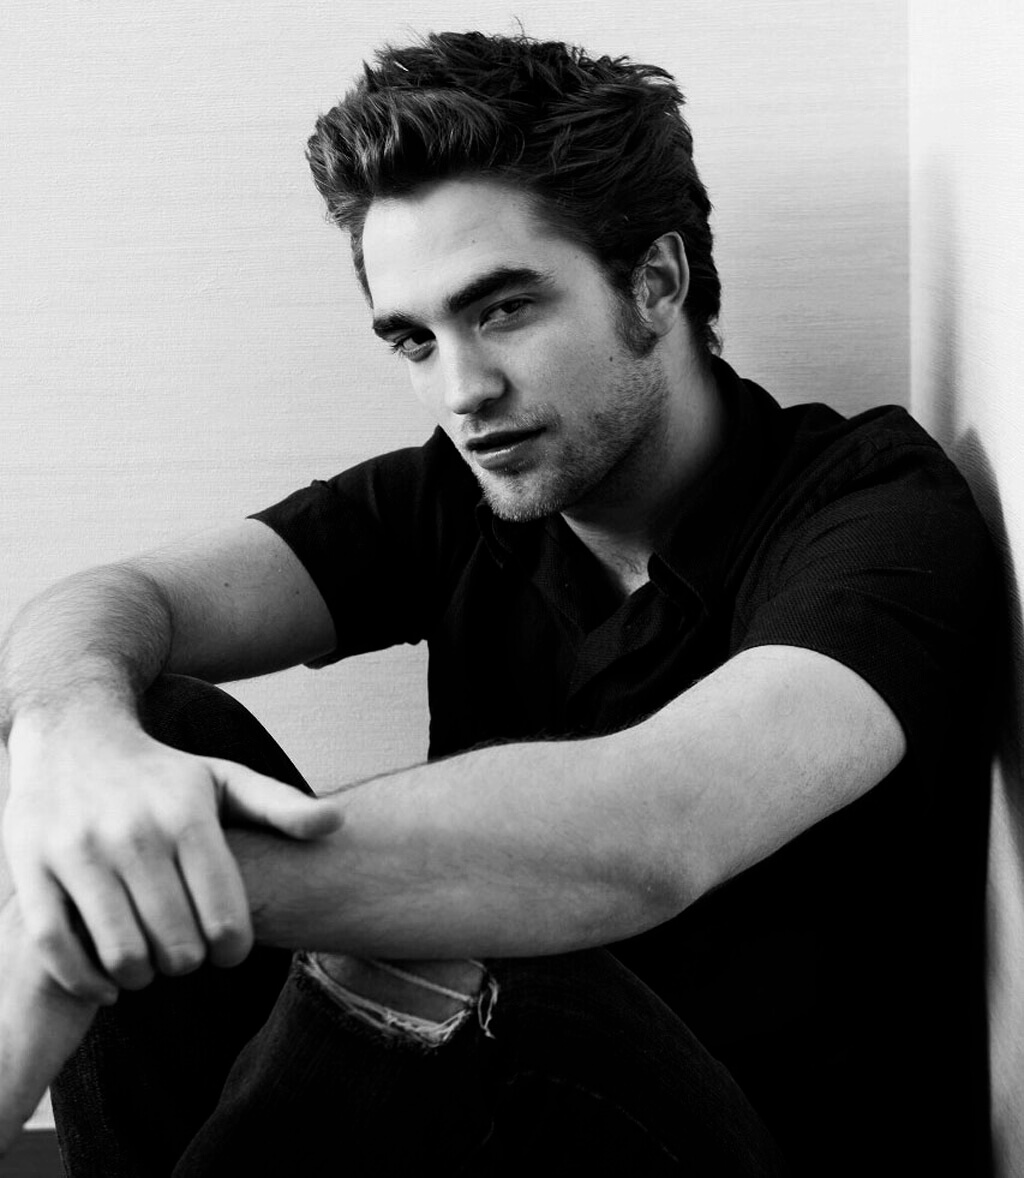 Robert Pattinson 2012